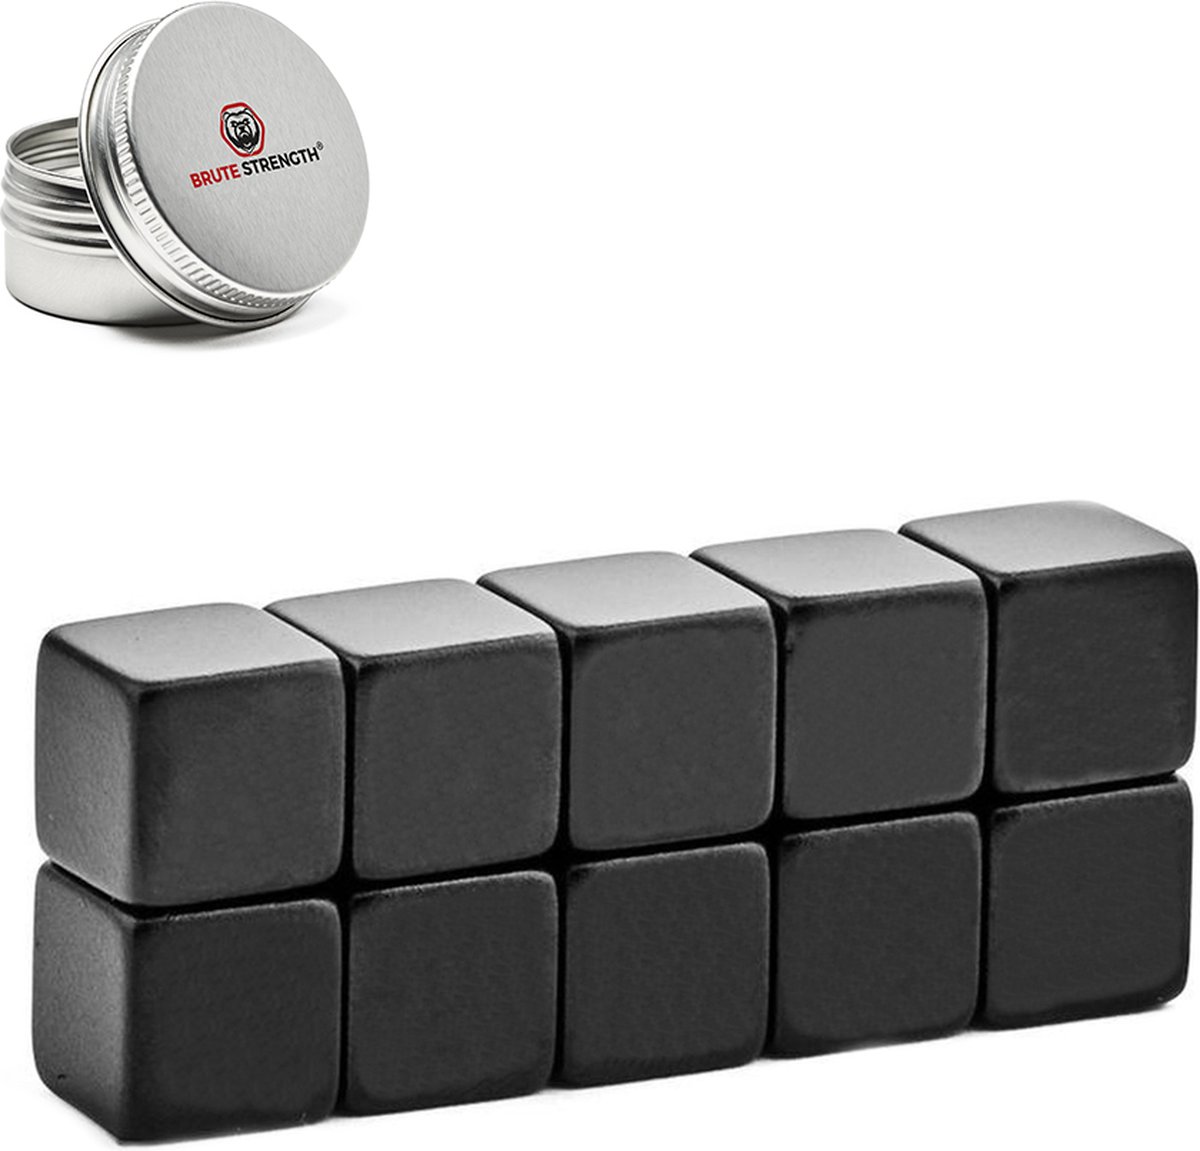 Brute Strength - Super sterke magneten - Vierkant - 10 x 10 x 10 mm - 10 stuks | Zwart - Neodymium magneet sterk - Voor koelkast - whiteboard - Brute Strength